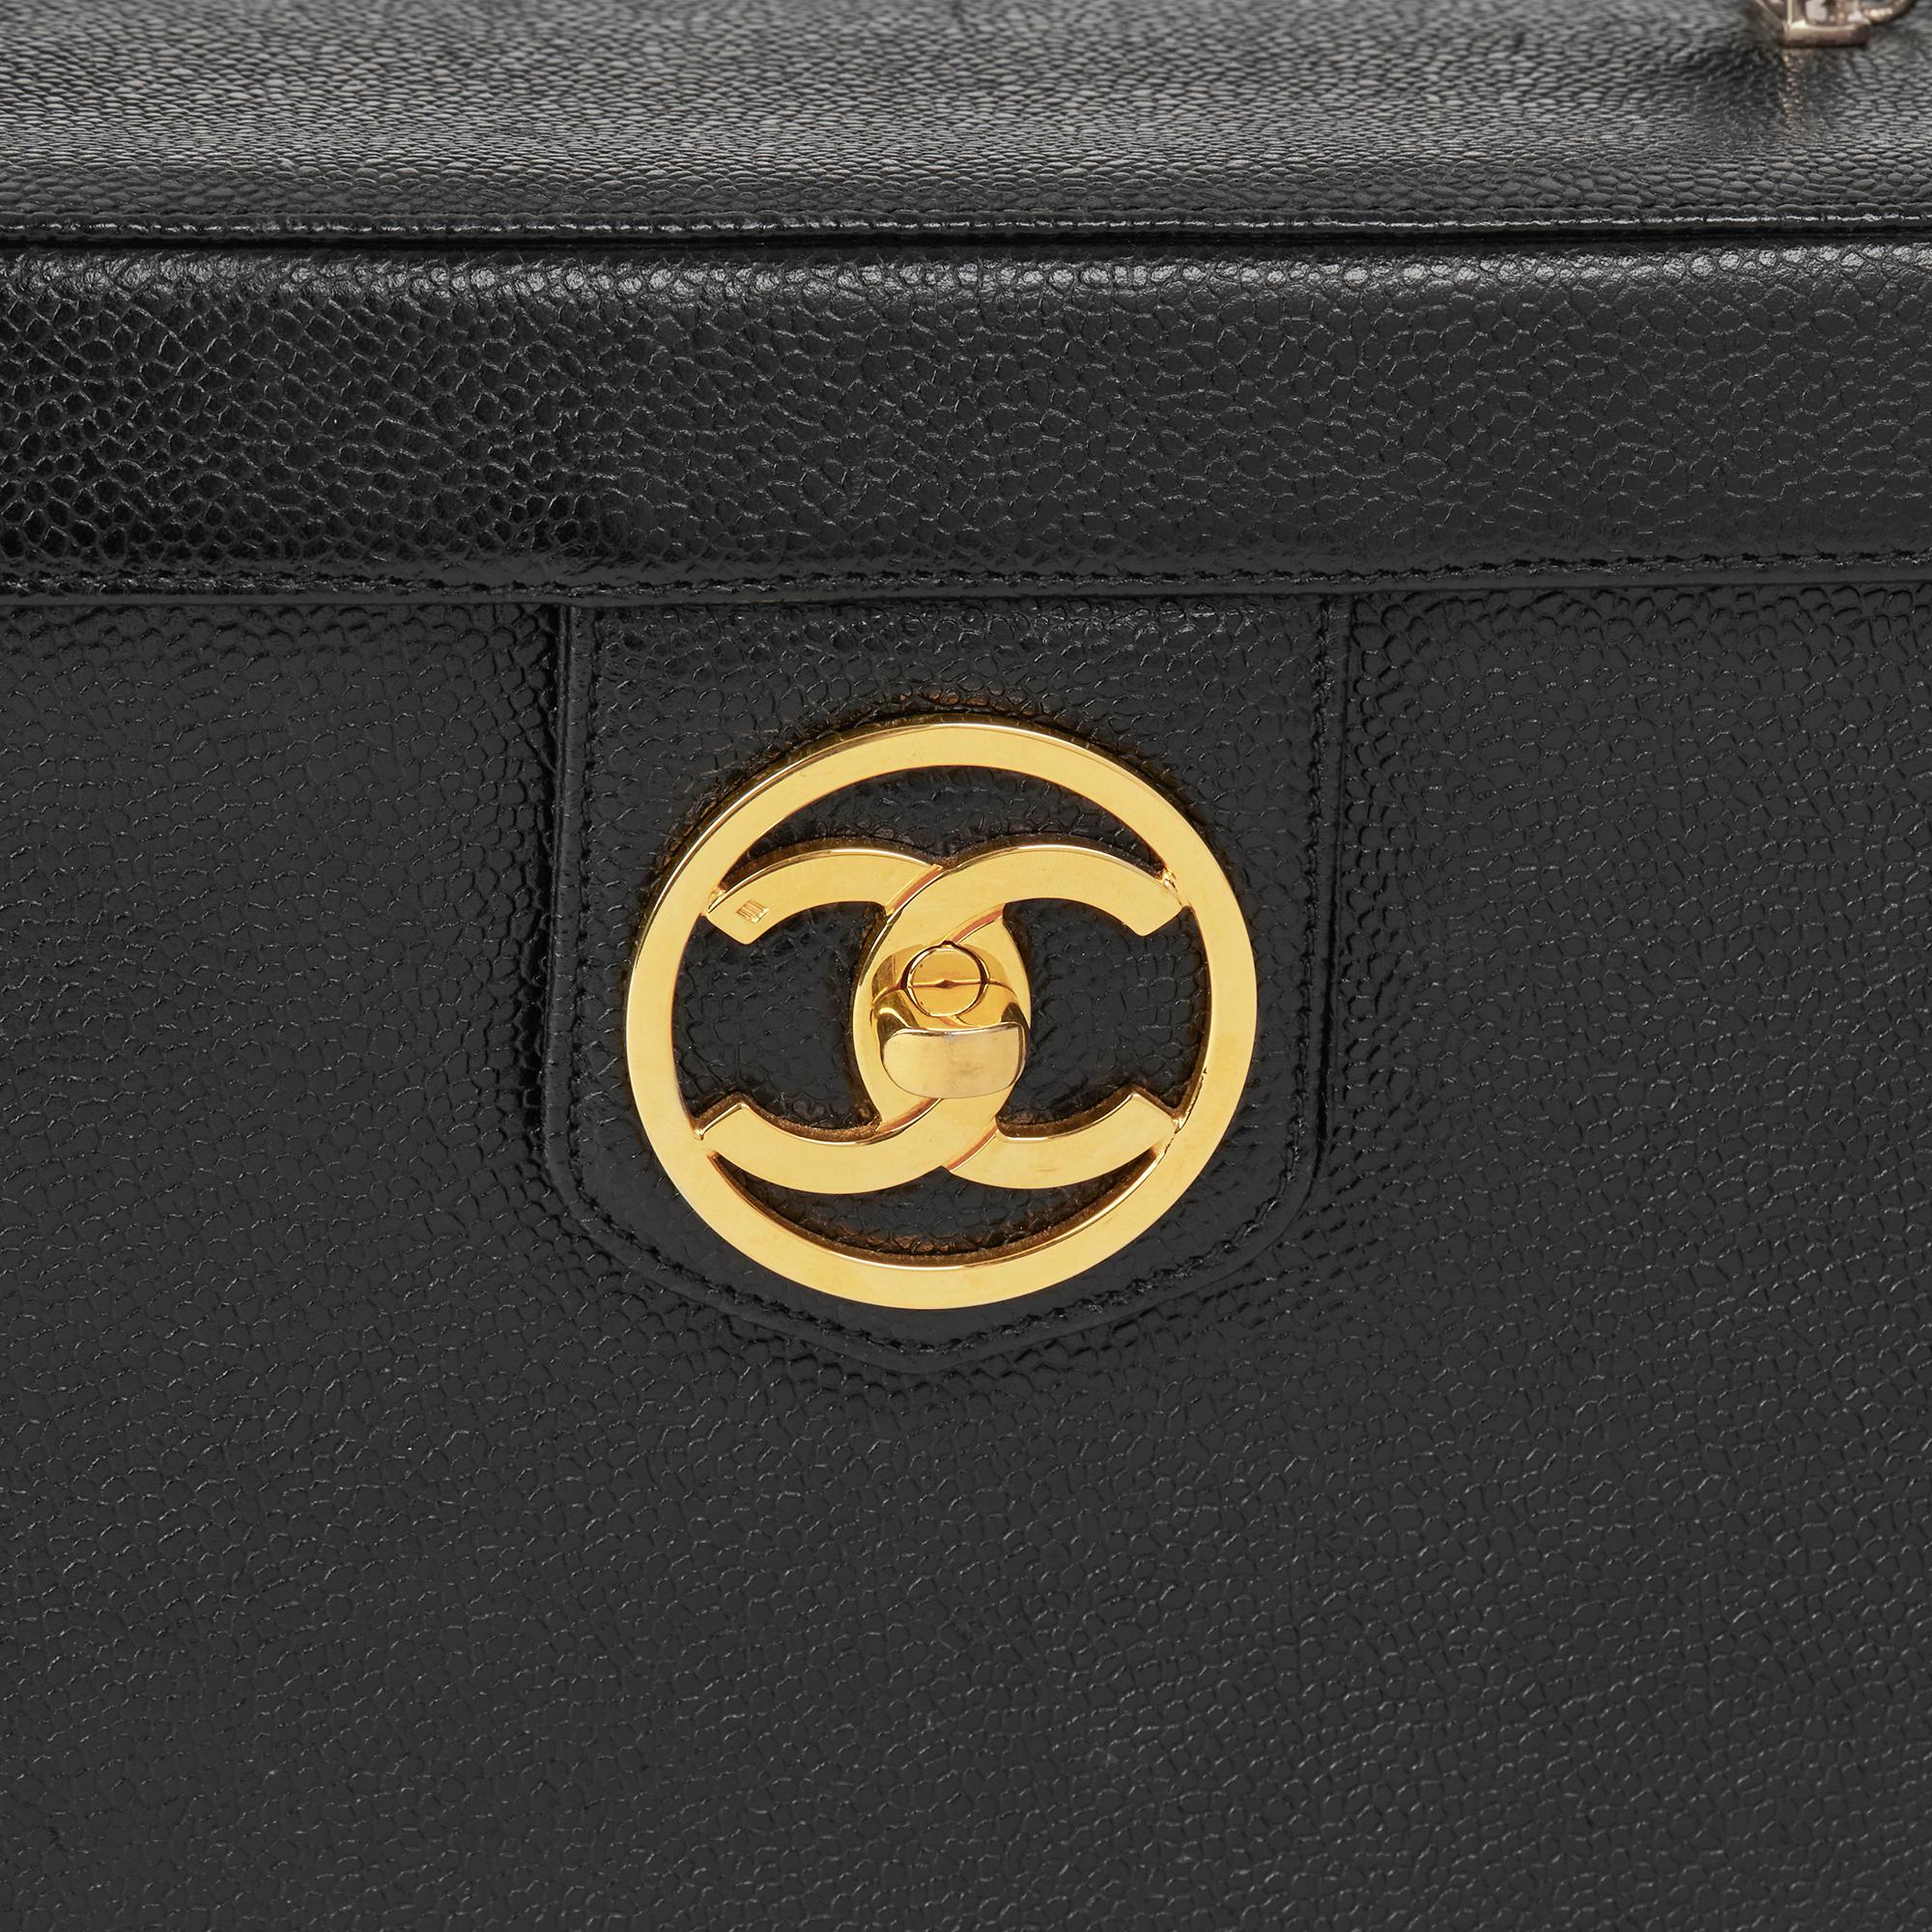 1996 Chanel Black Caviar Leather Vintage Classic Vanity Case 3